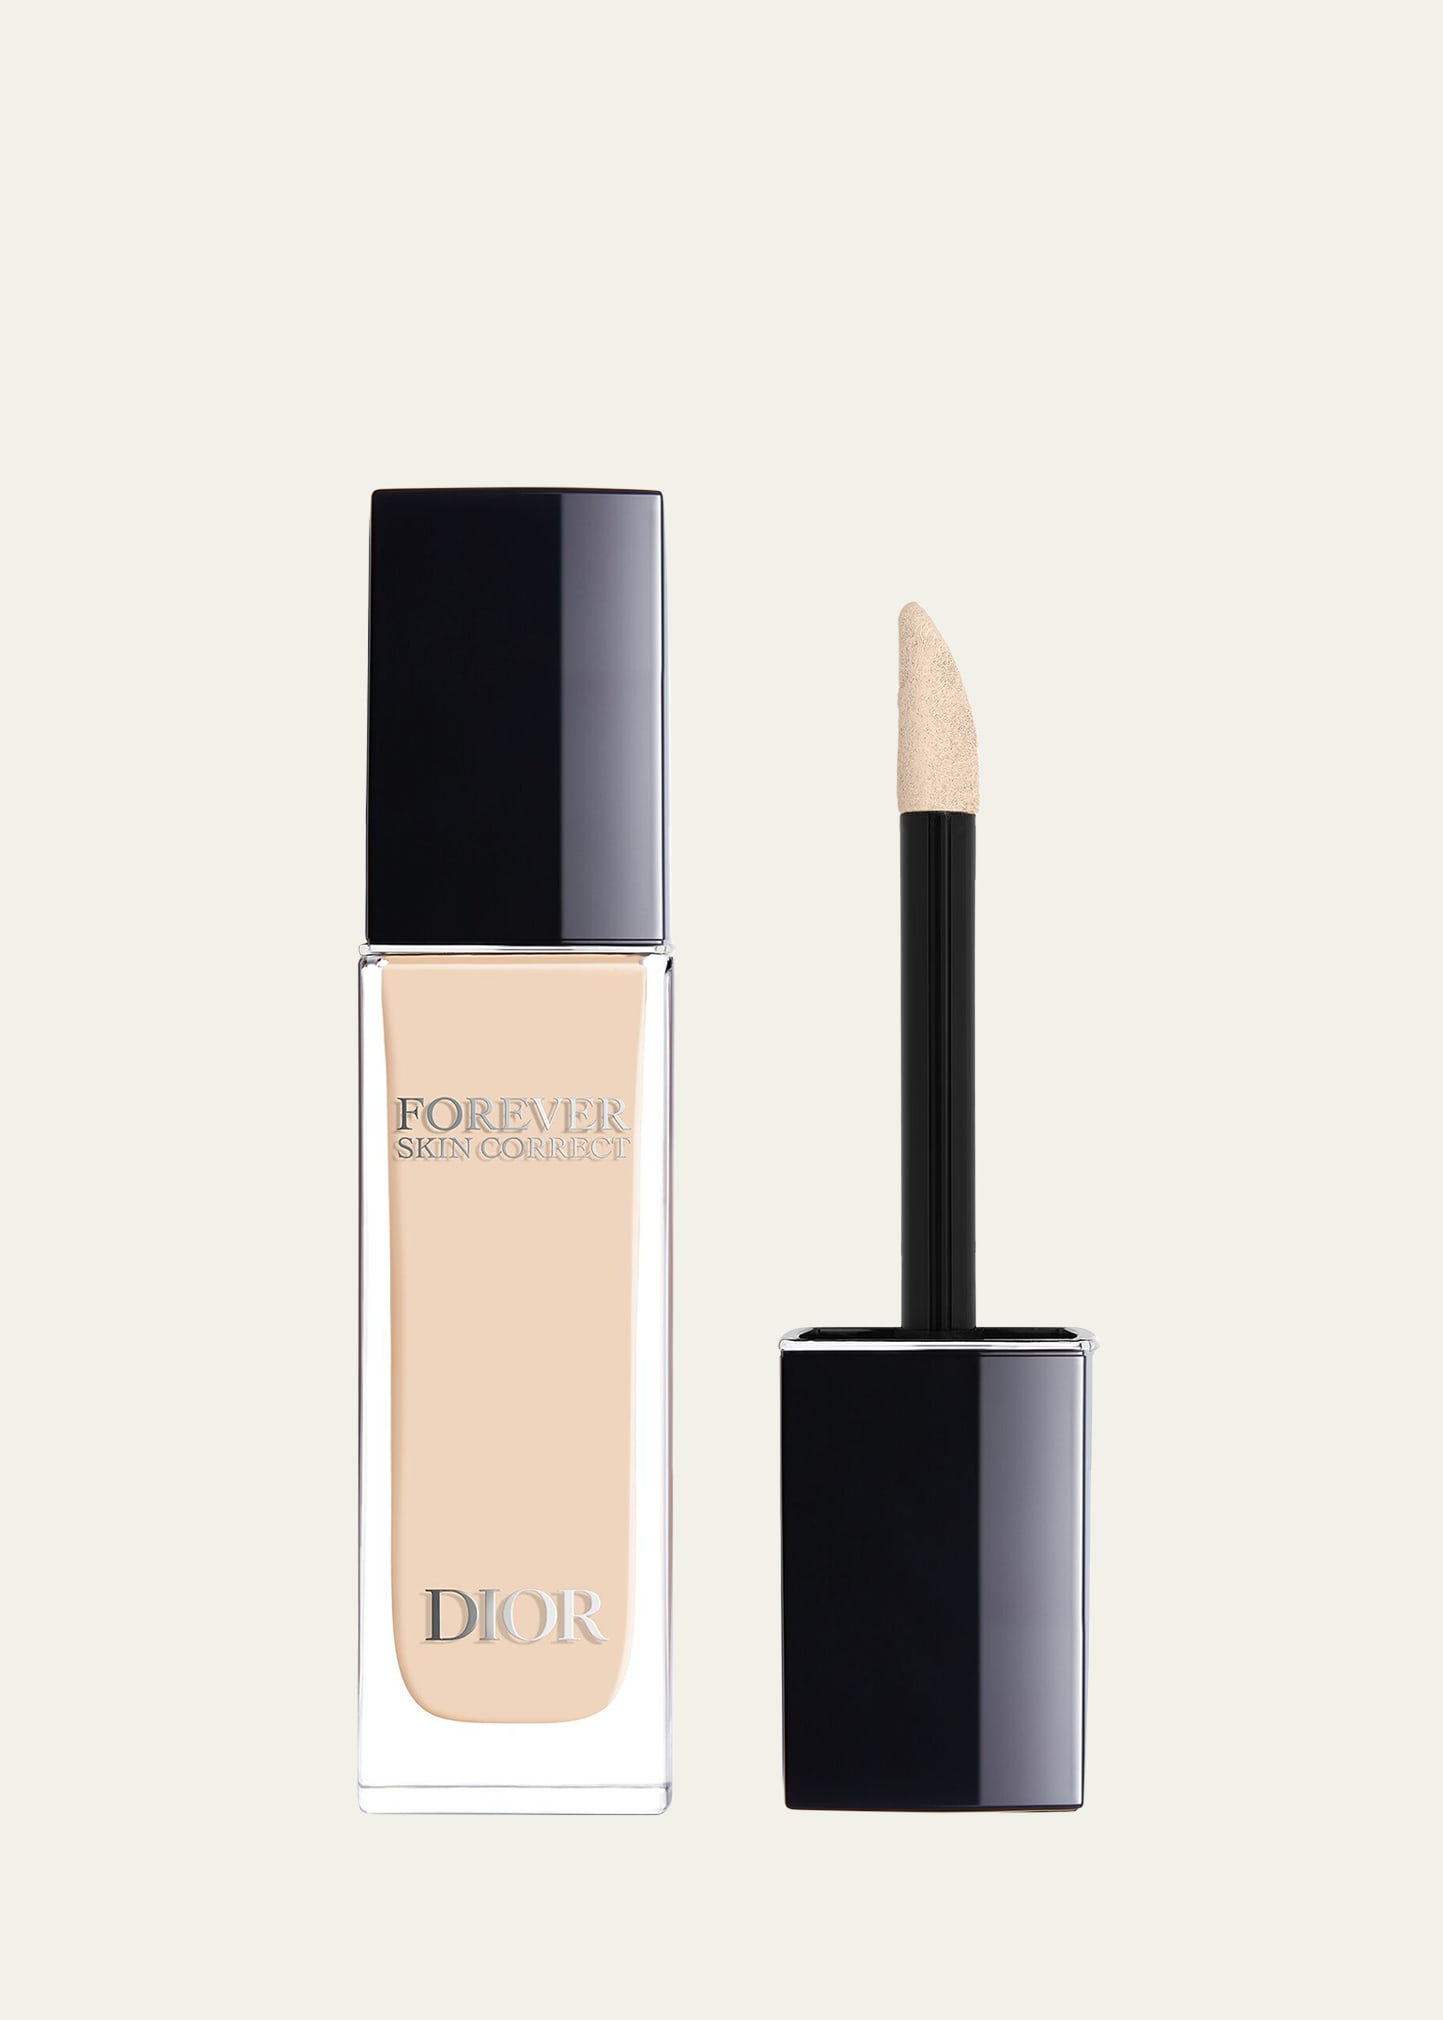 Dior Forever Skin Correct Full-coverage Concealer In 1 N Neutral